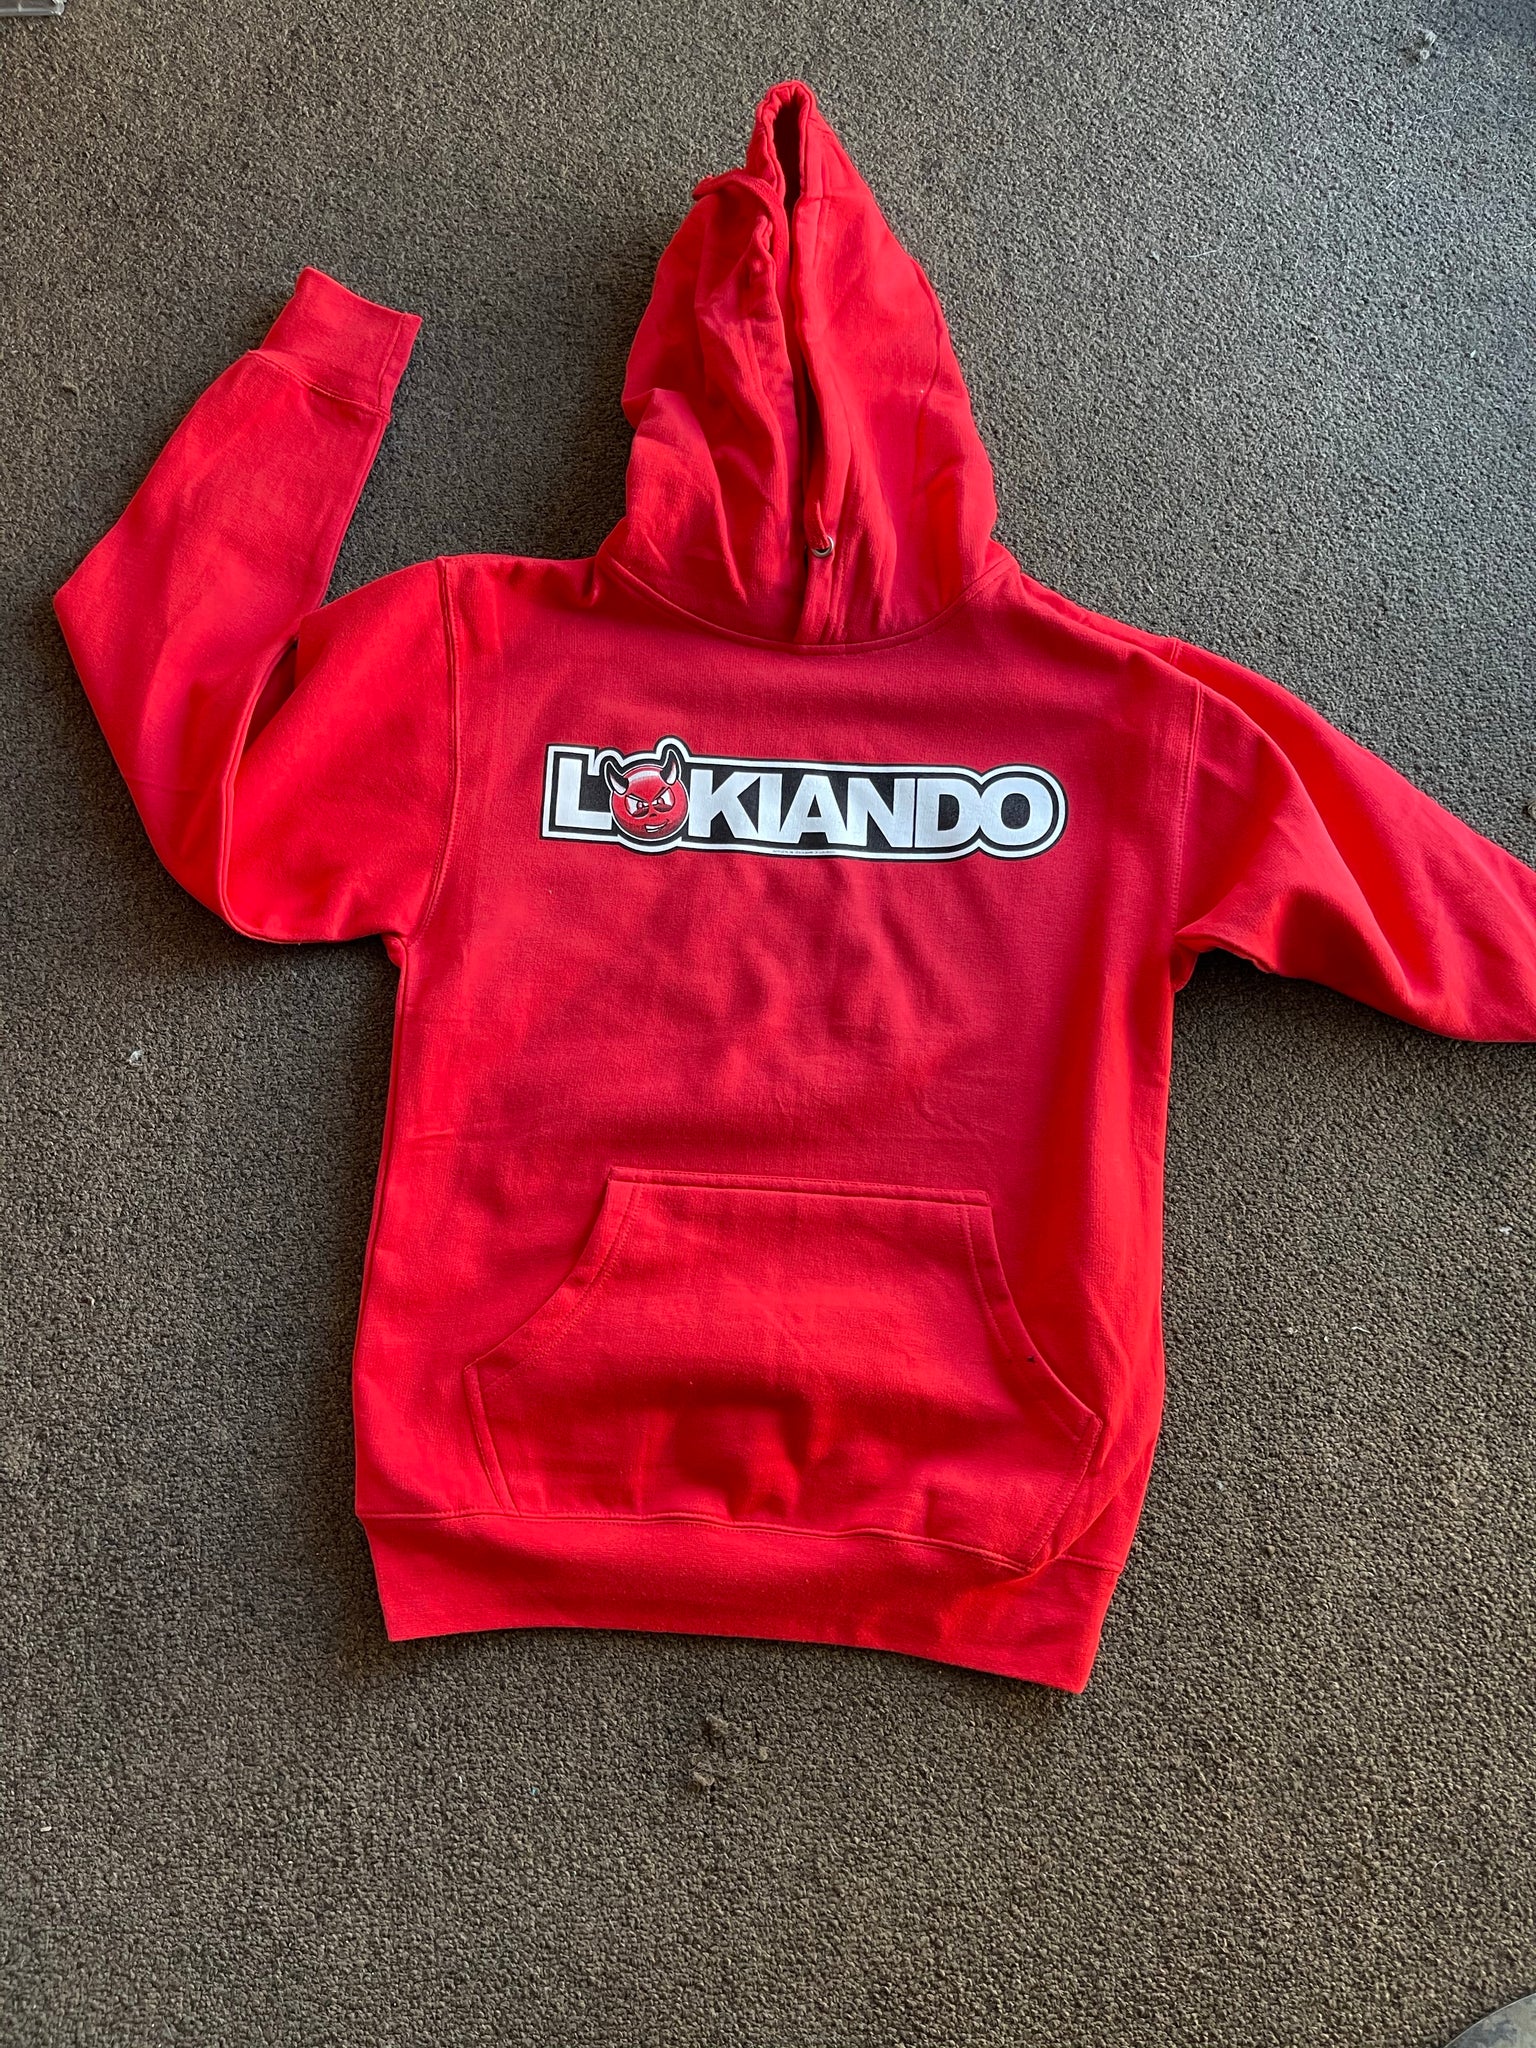 Lokiando hoodie